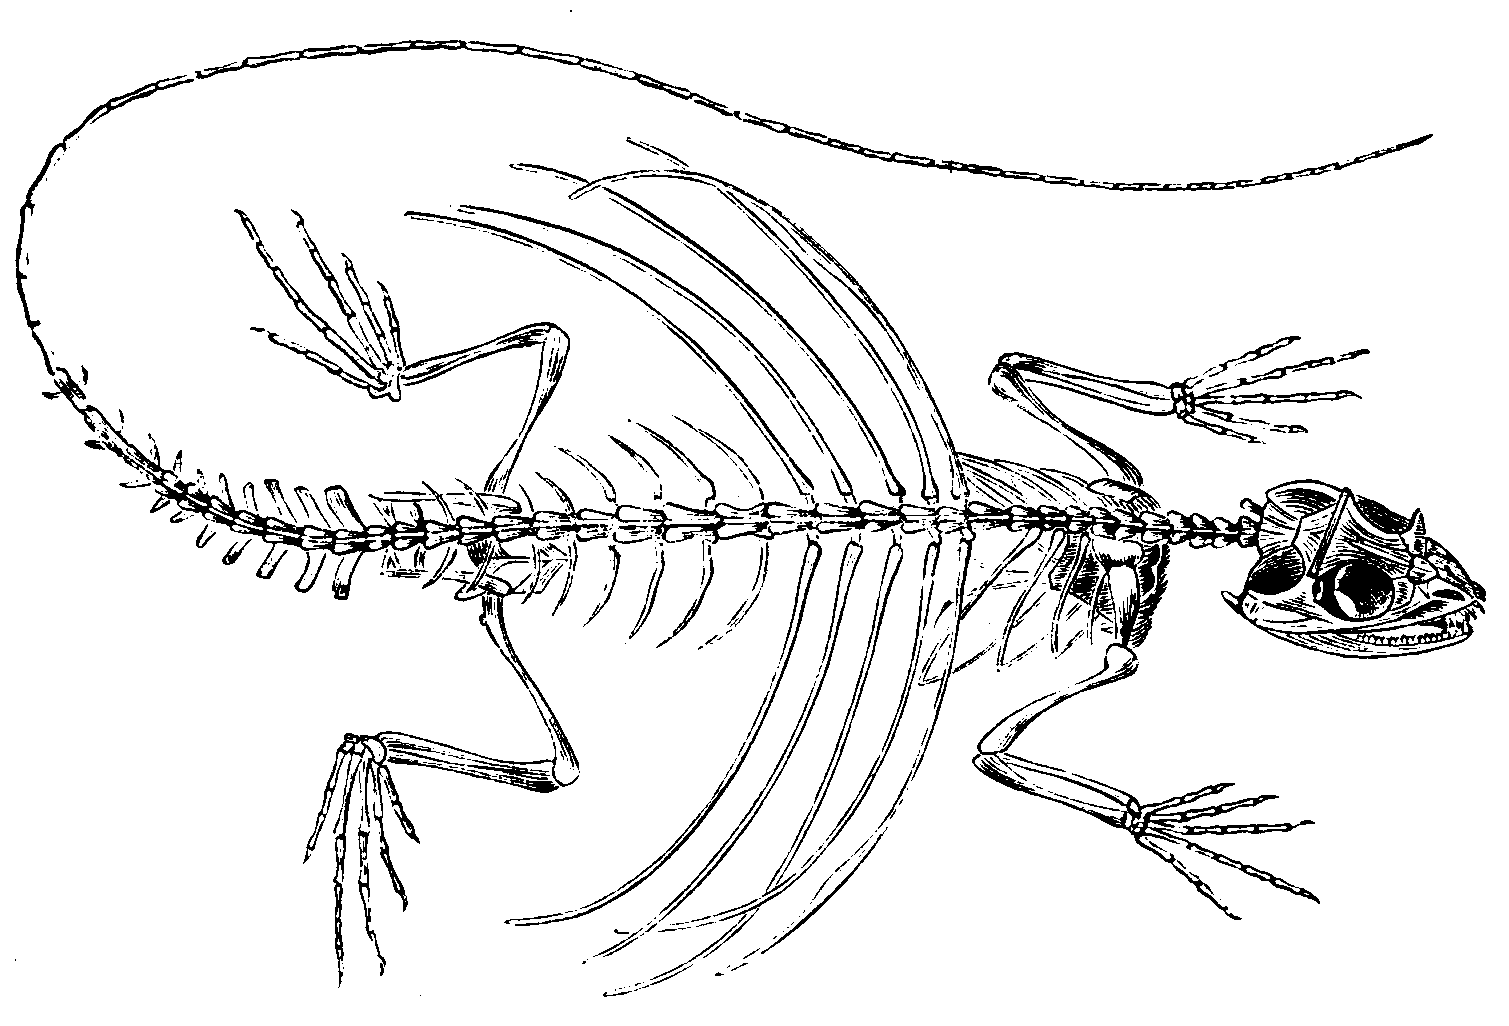 Skeleton of the flying-dragon.